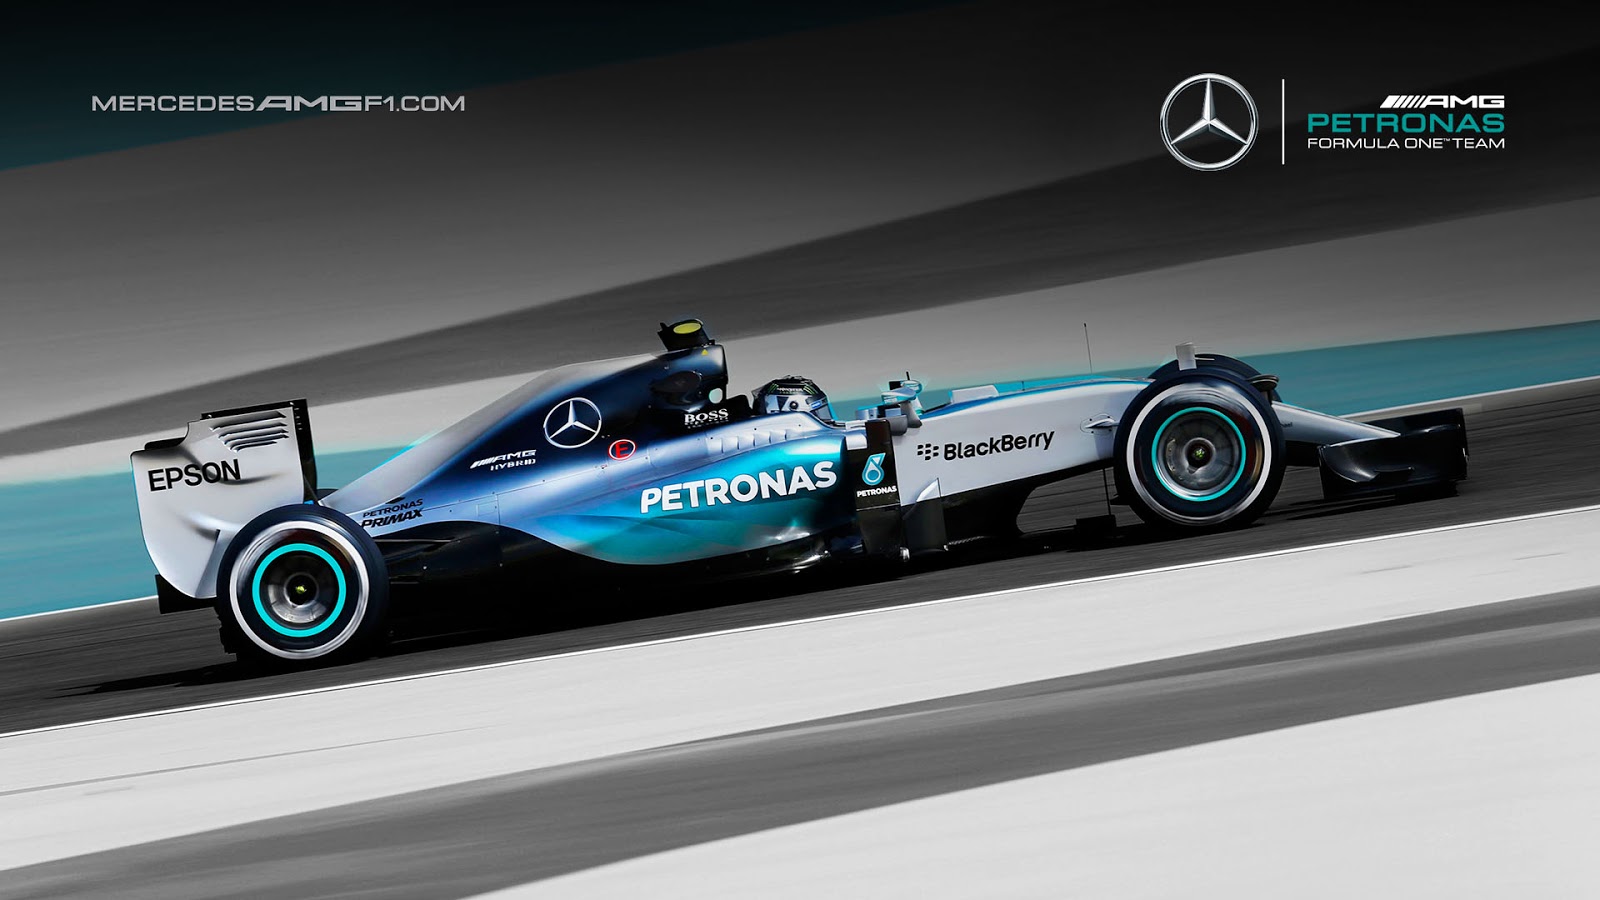 F1 Mercedes Wallpaper Desktop Background C5m Cars